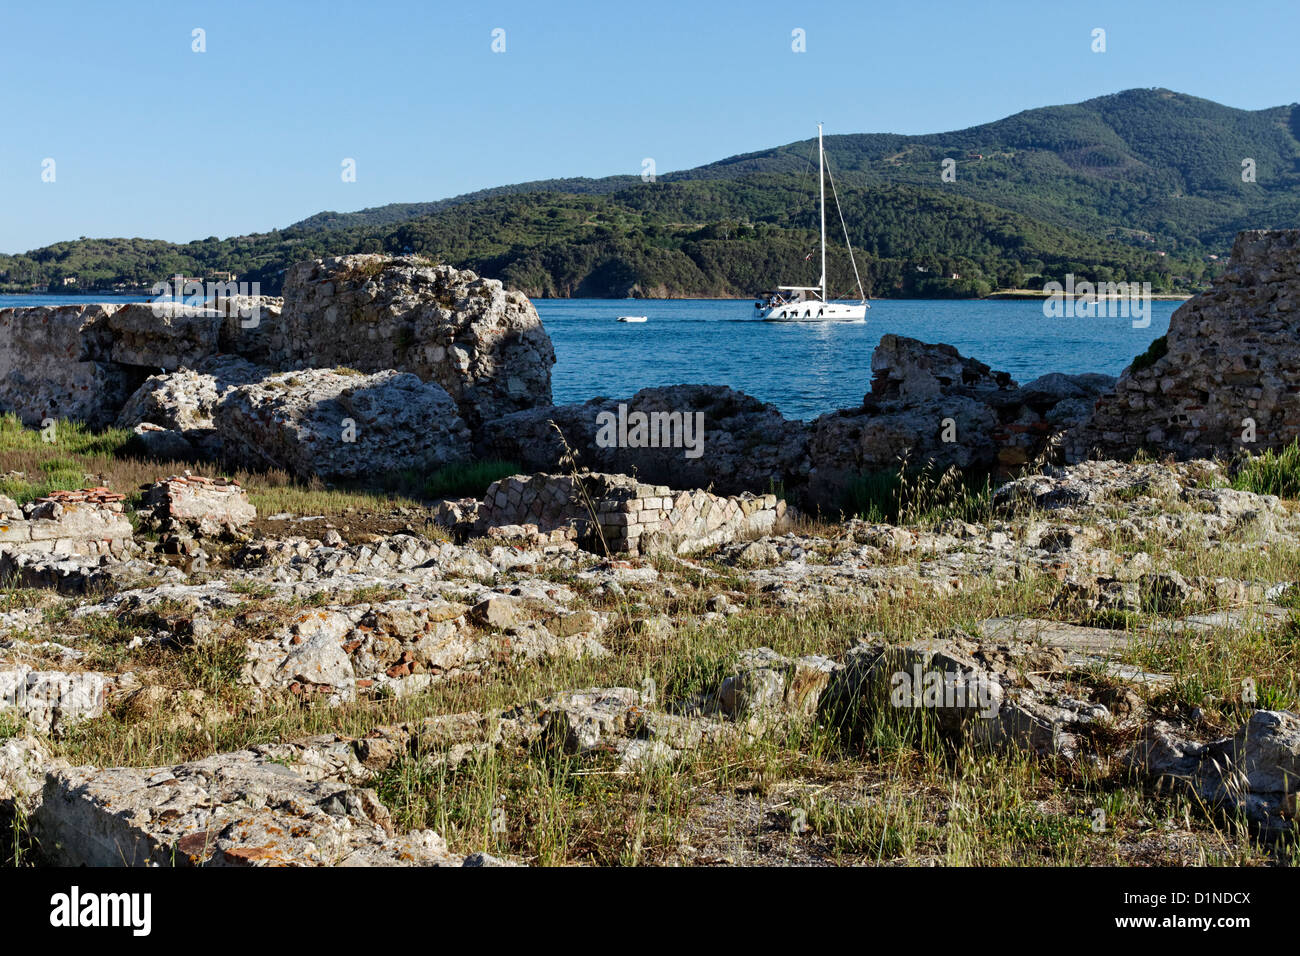 Boat Harbour entrata a Portoferraio, Isola d'Elba toscana italia Foto Stock